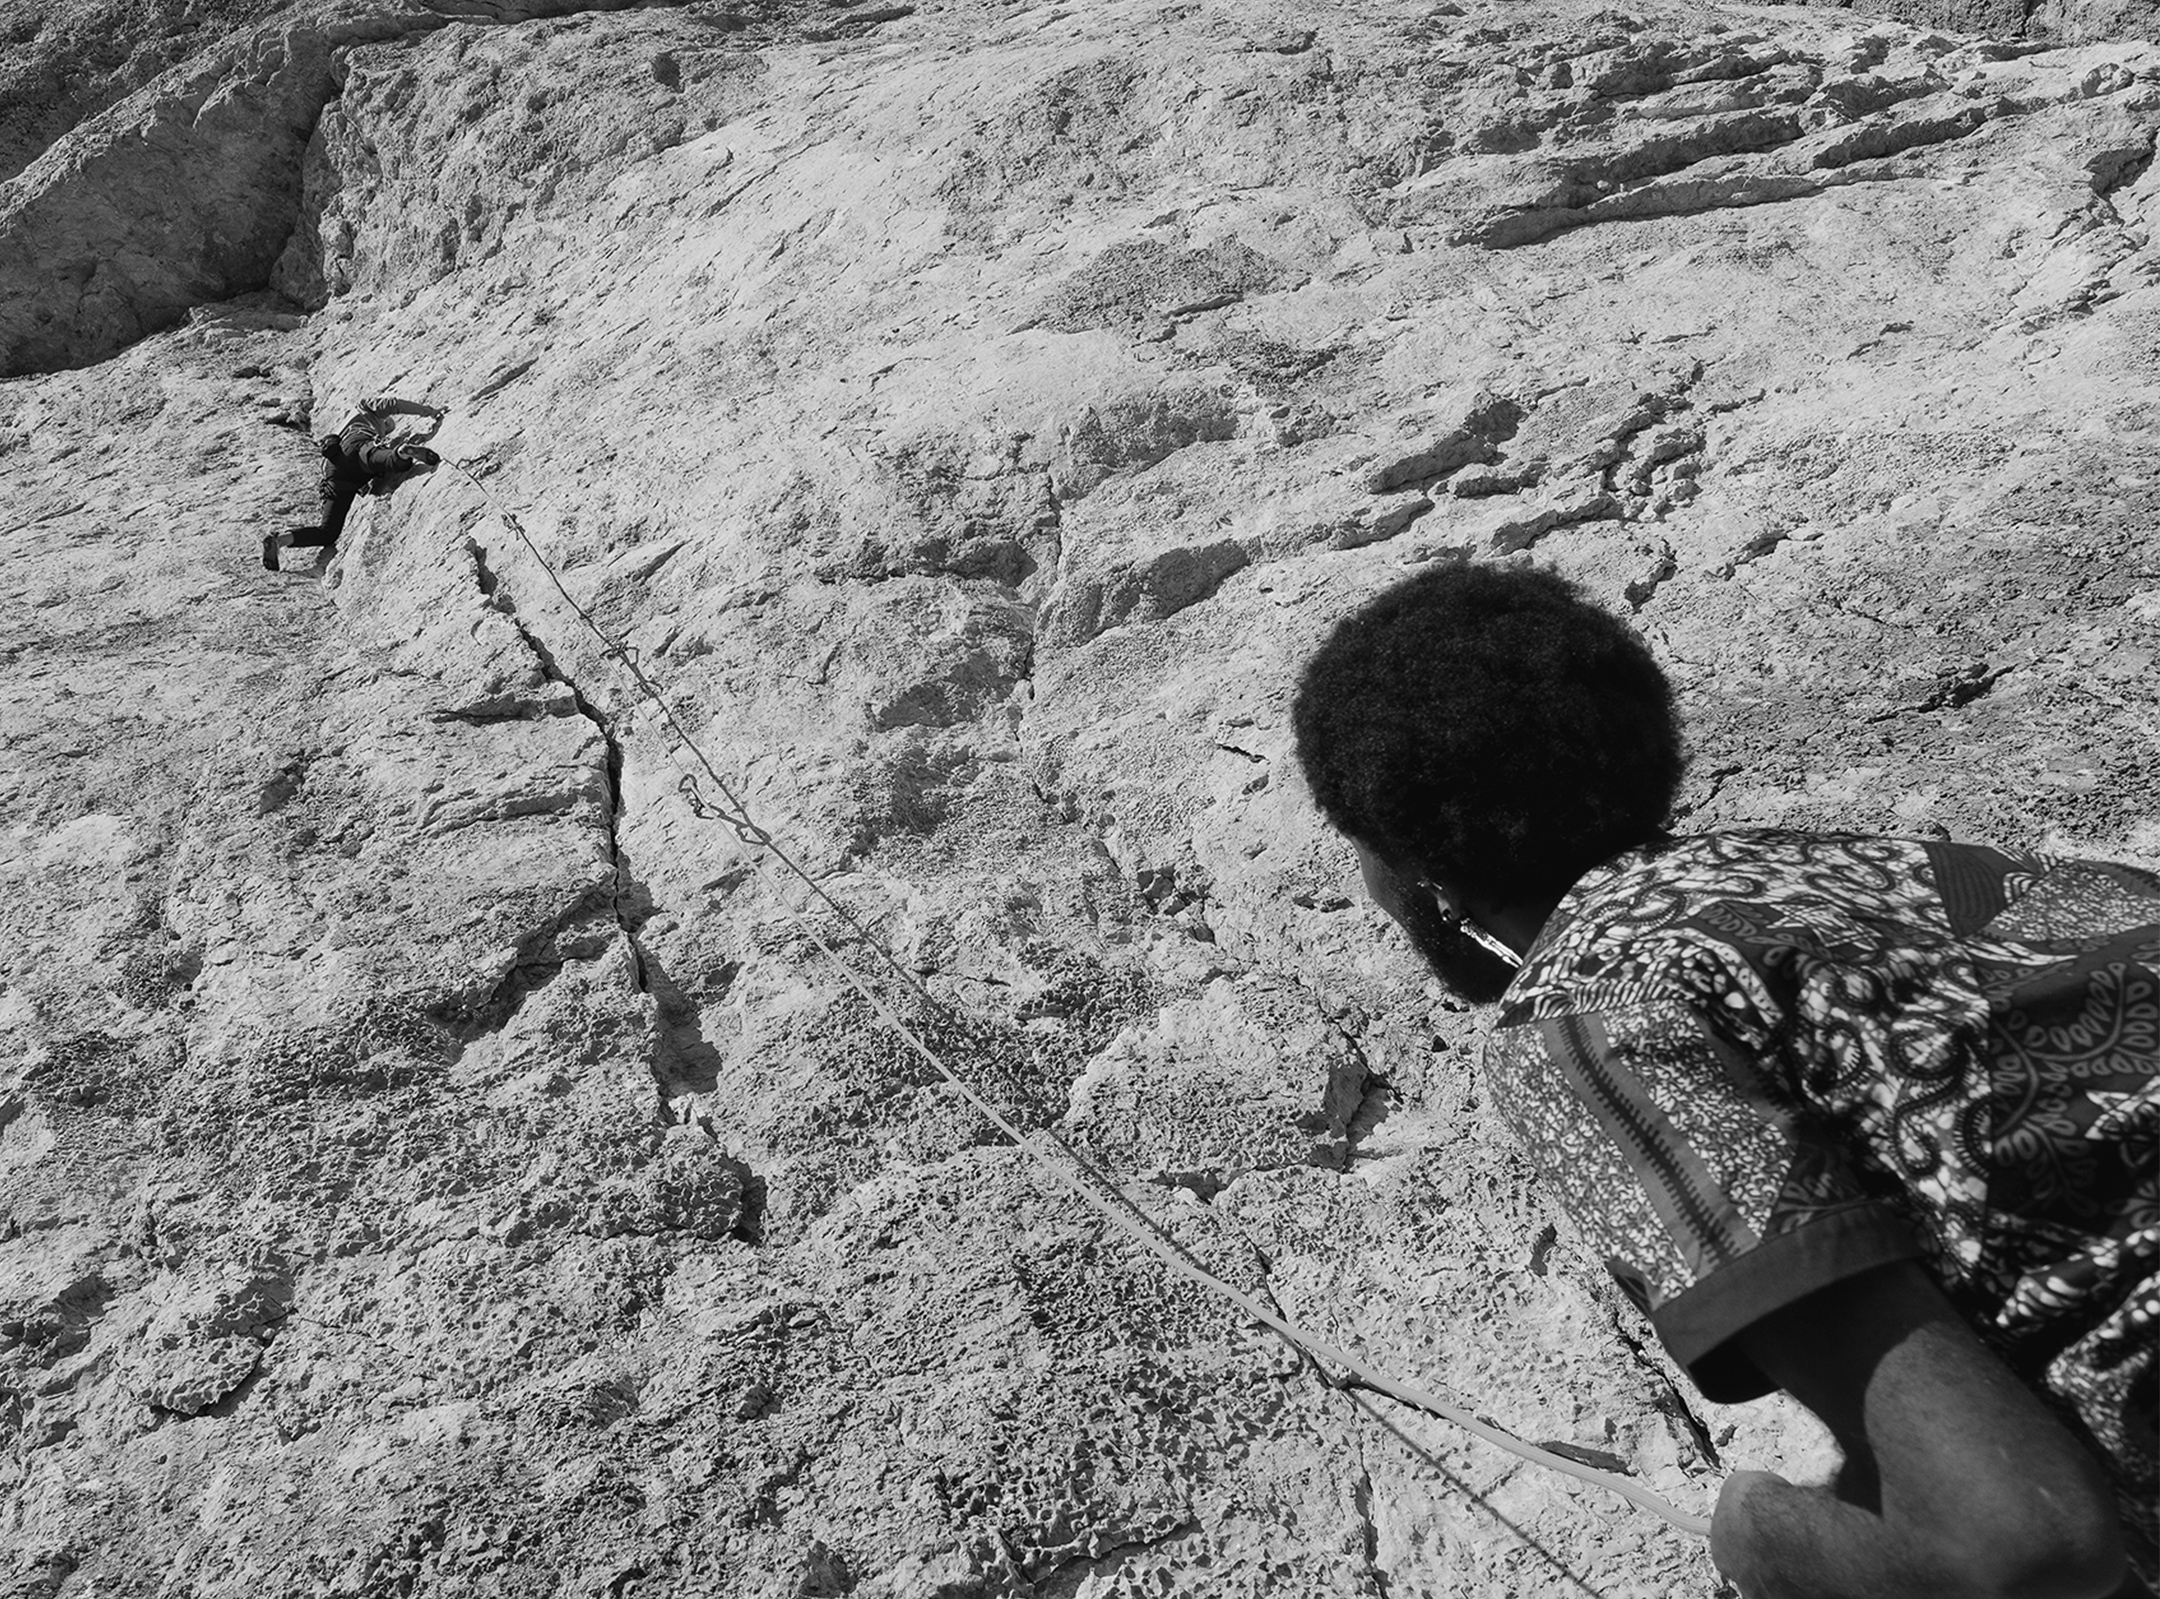 Arcteryx - Belaying a rock climber